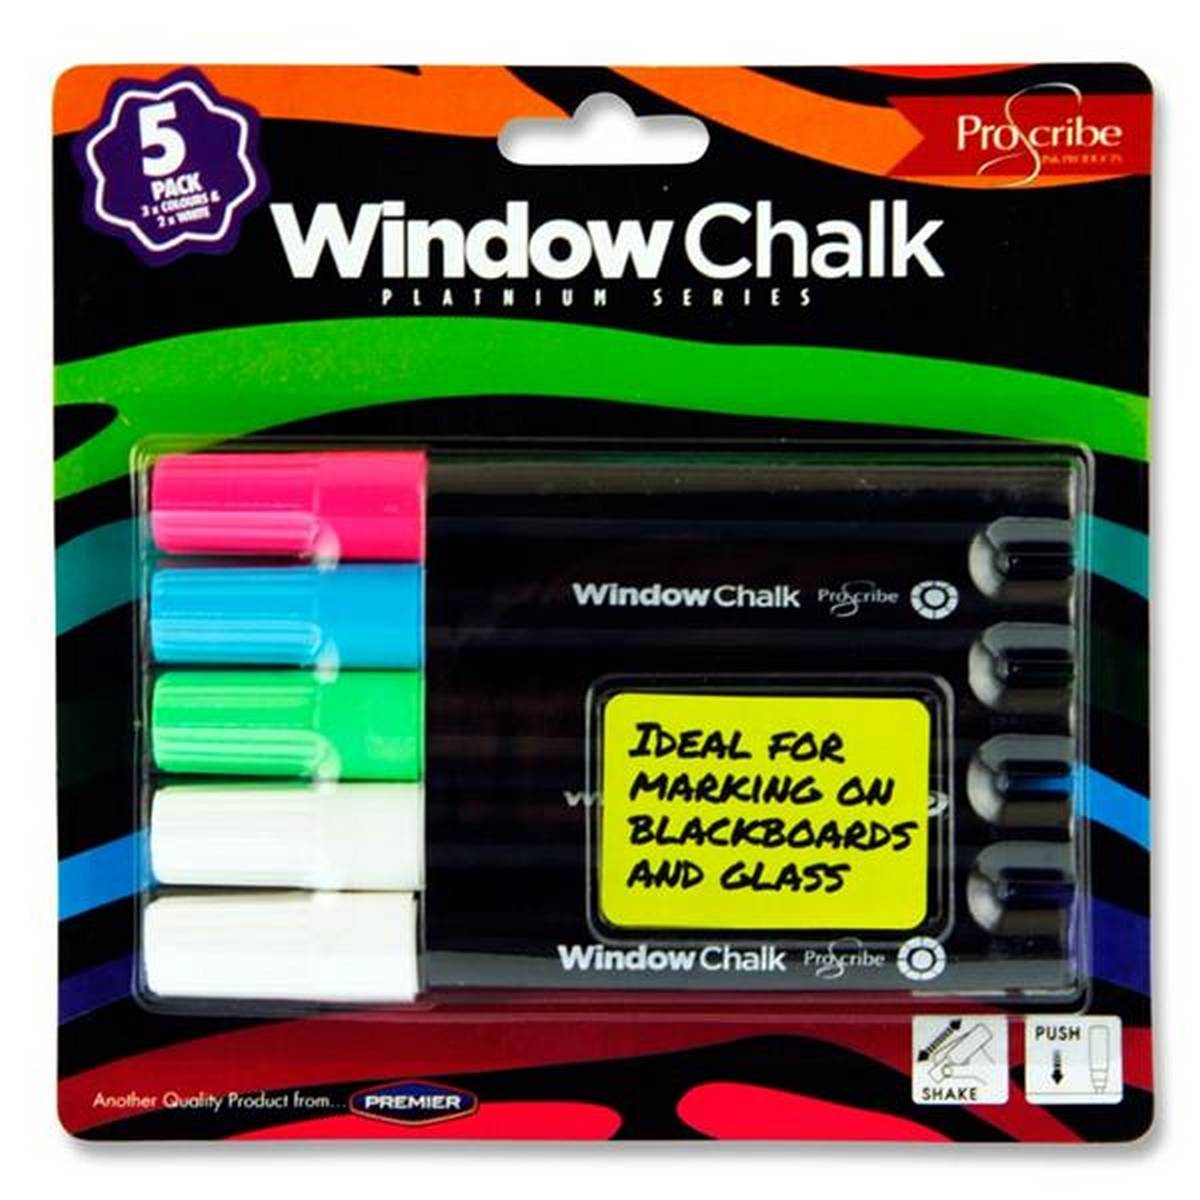 Pro:scribe Card 5 Window Chalk Markers